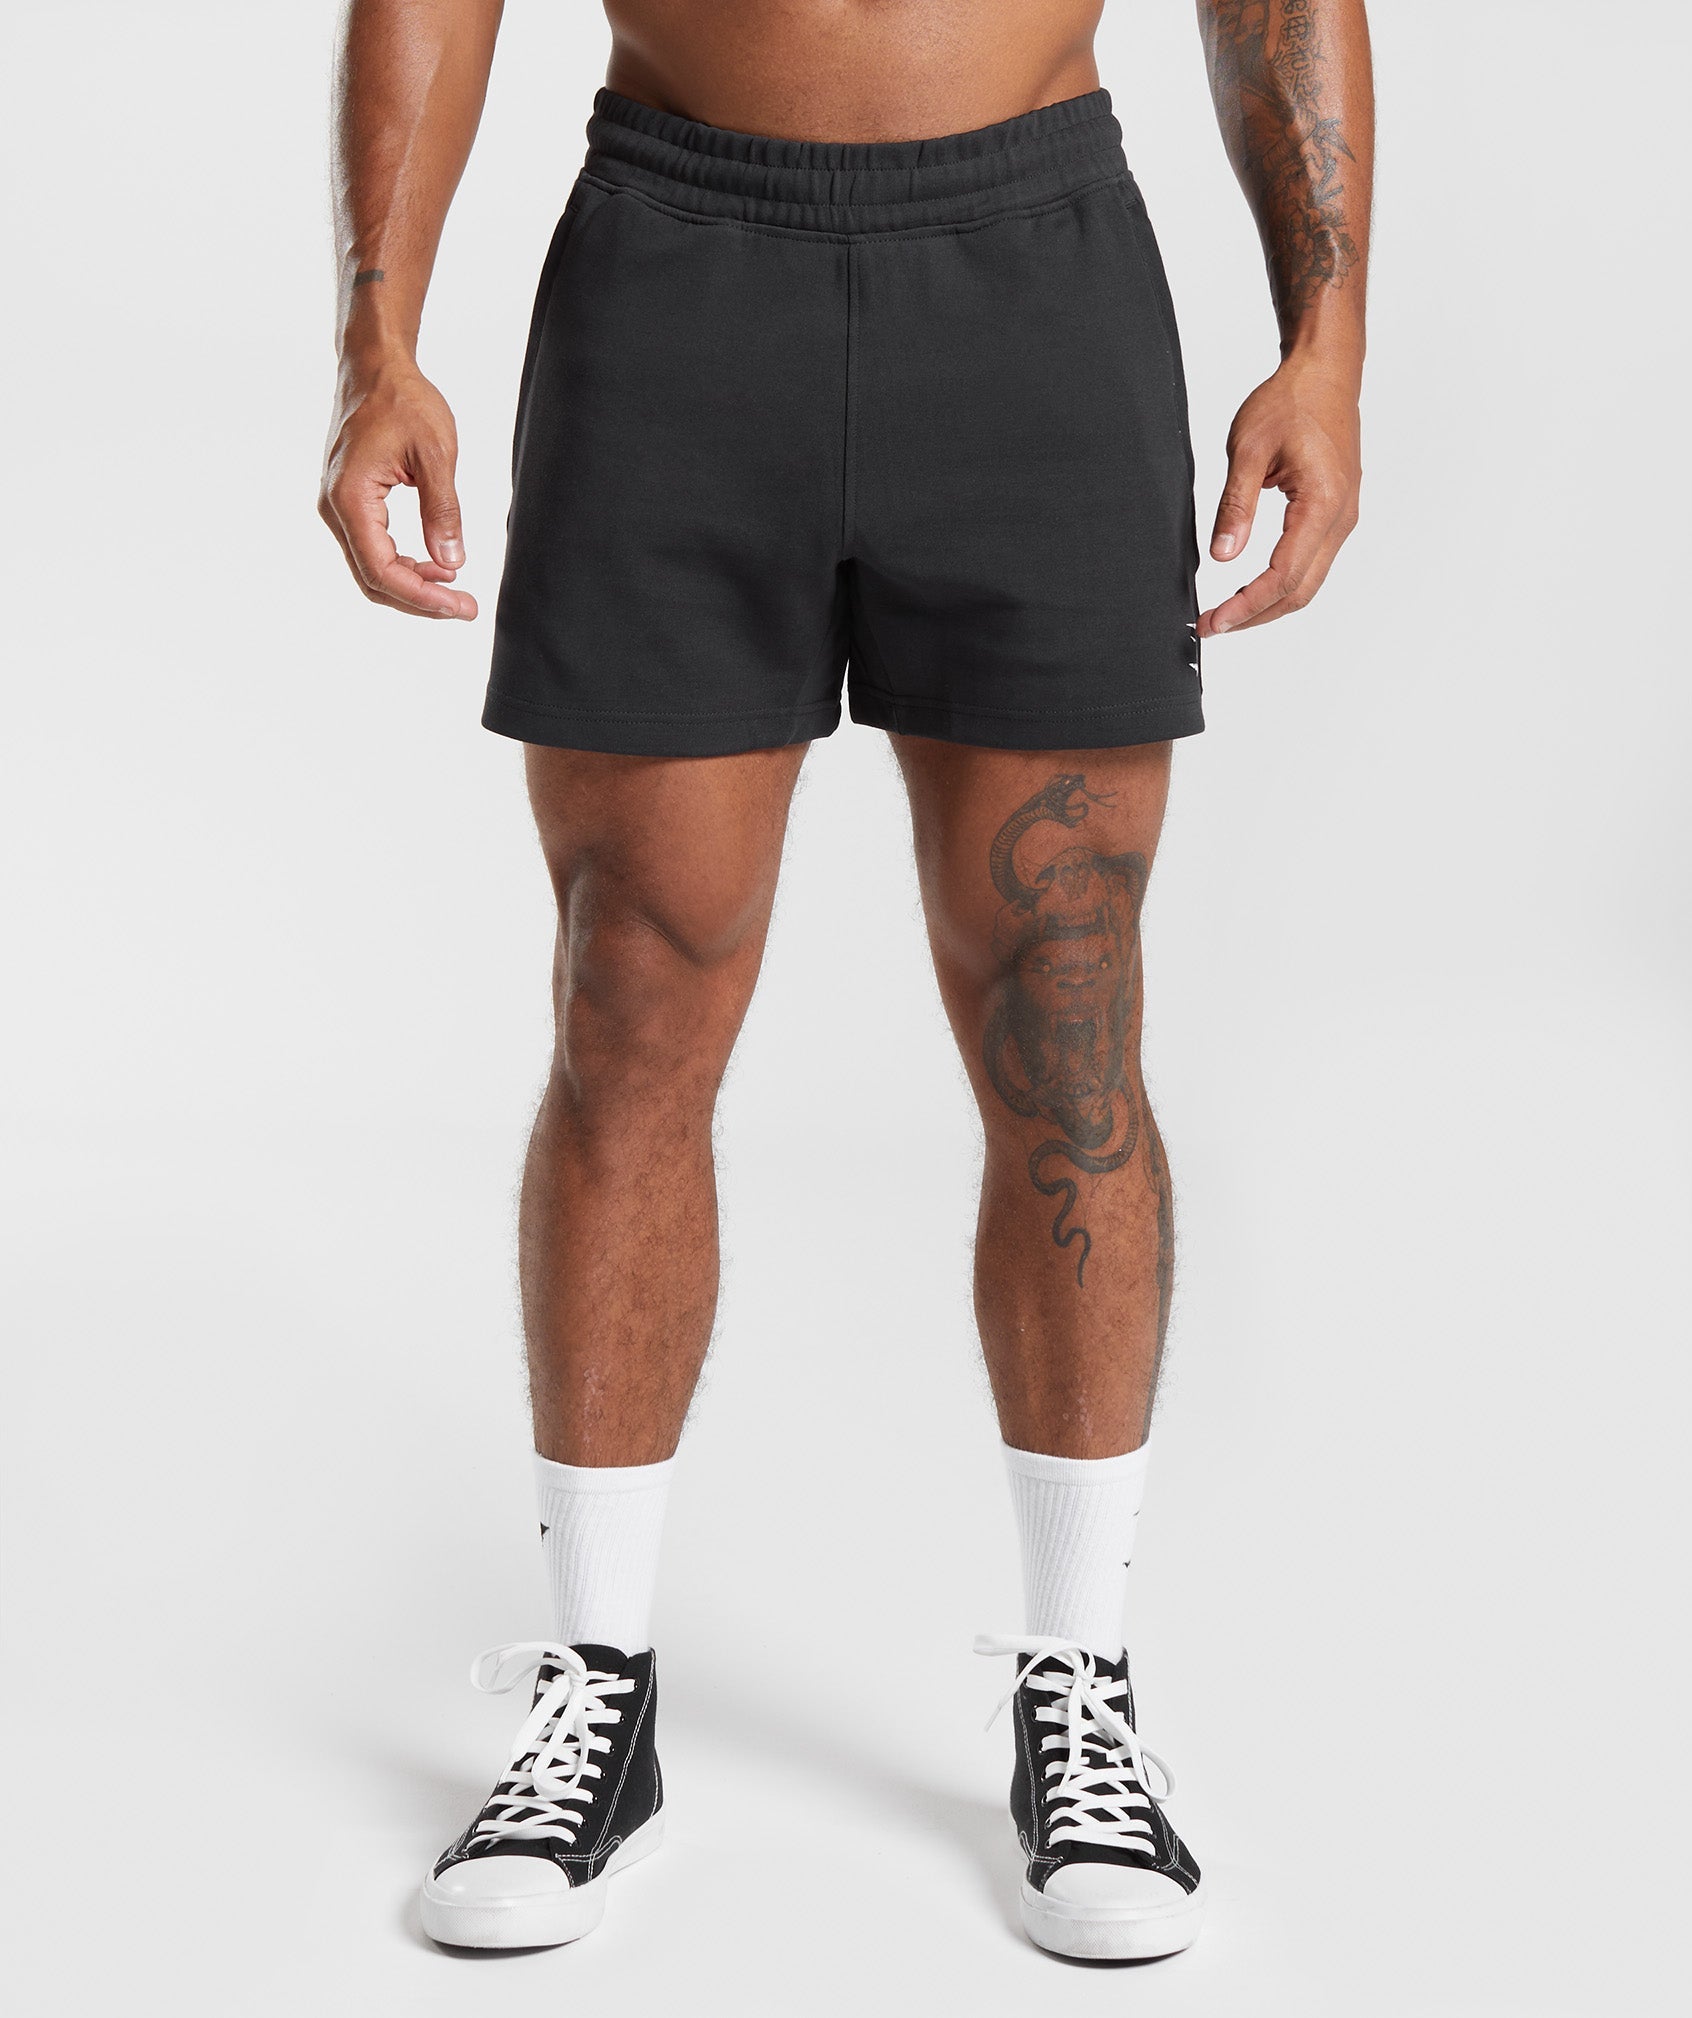 Gymshark React 5 Shorts - Black